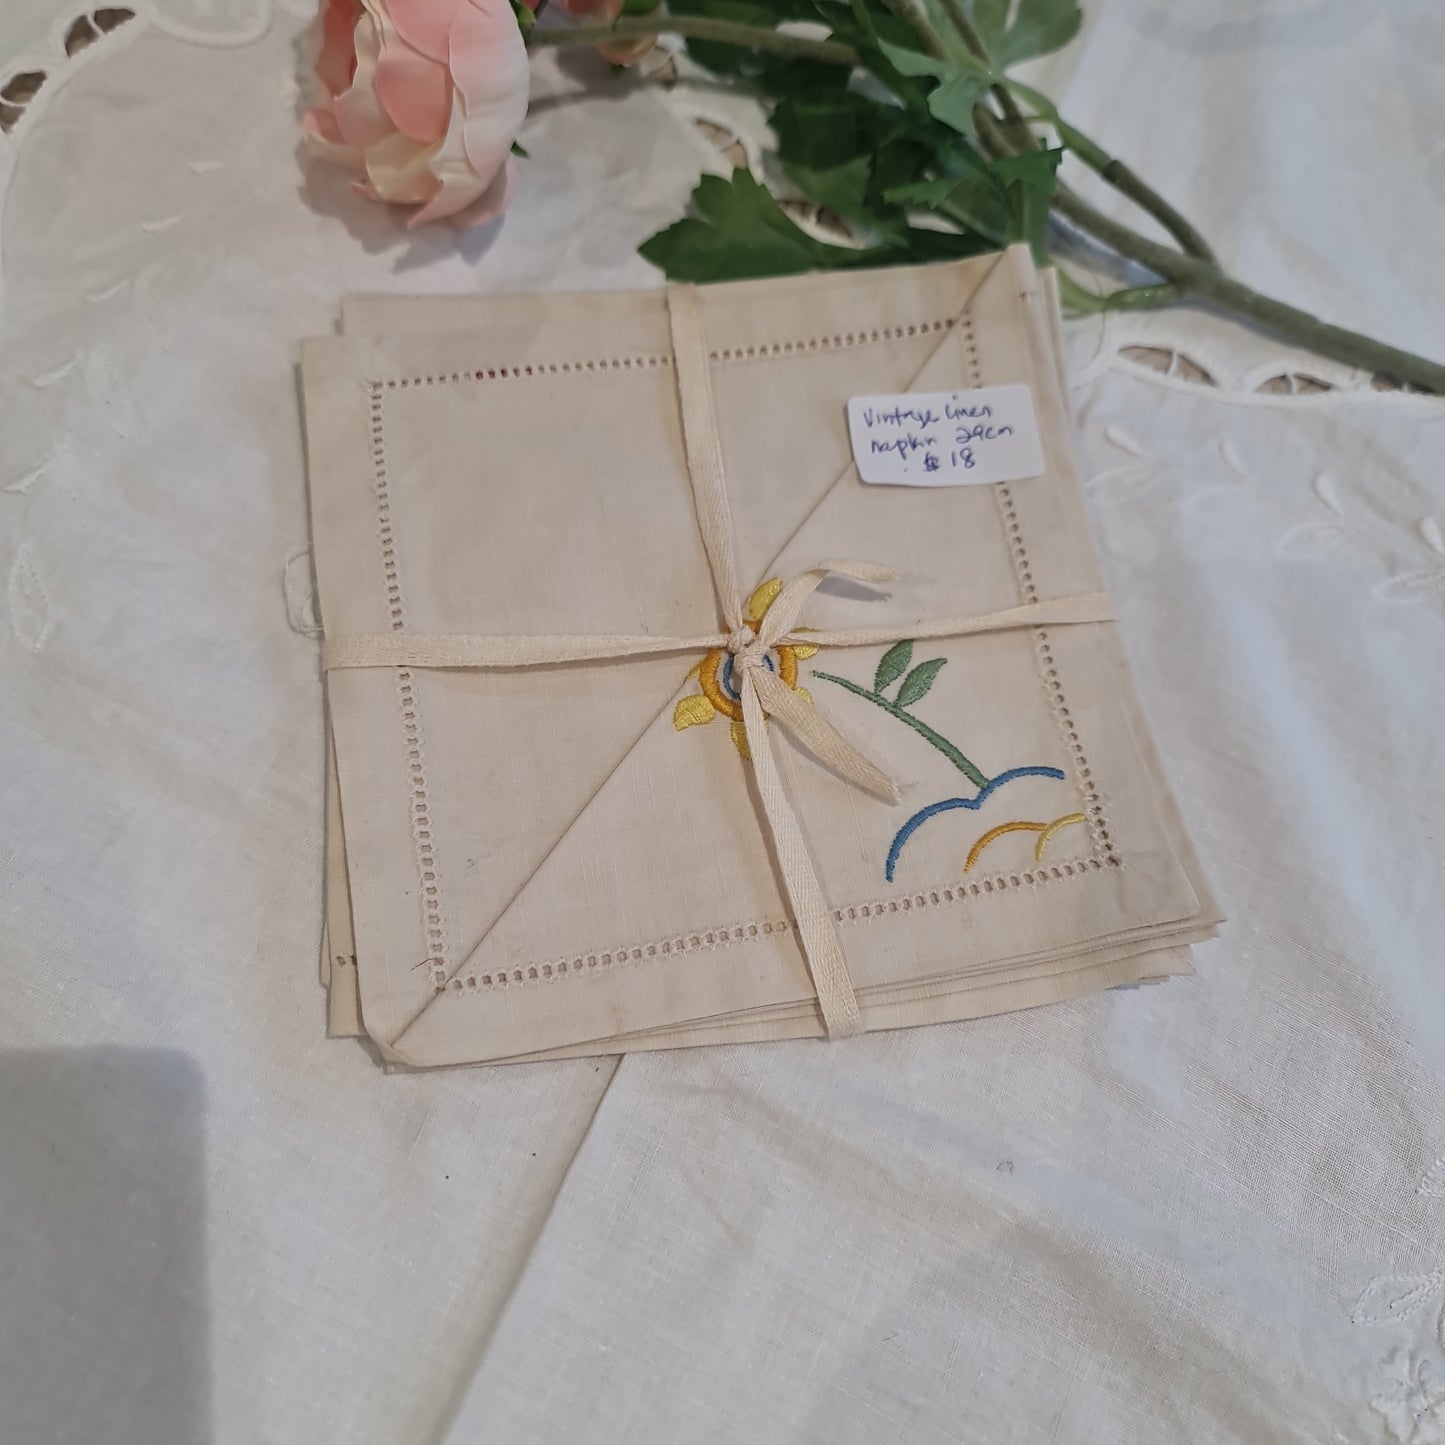 Vintage linen napkin - new not use - set of 3